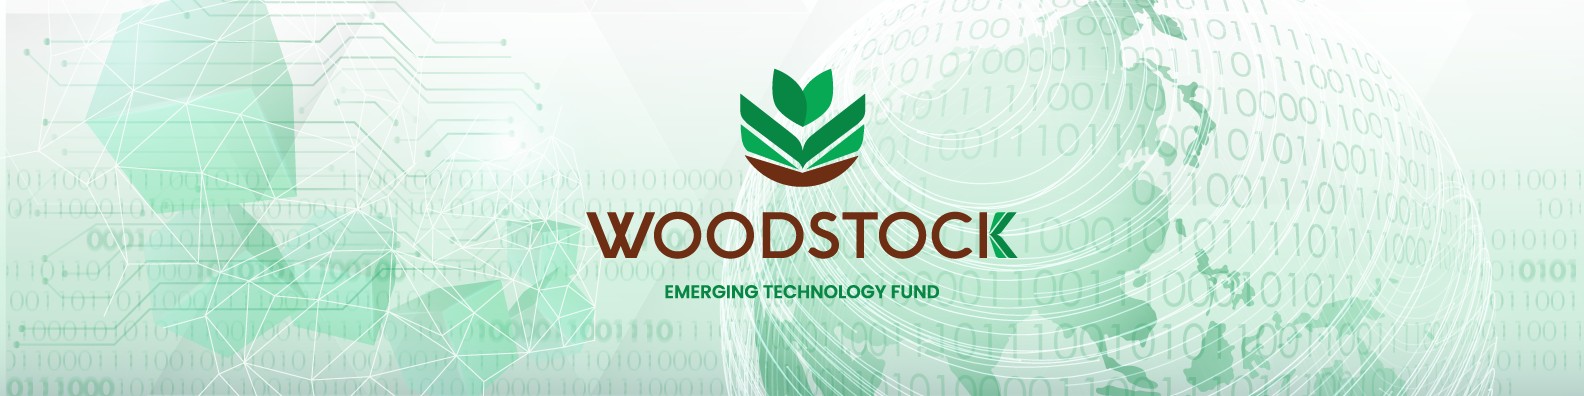 woodstock fund | linkedin